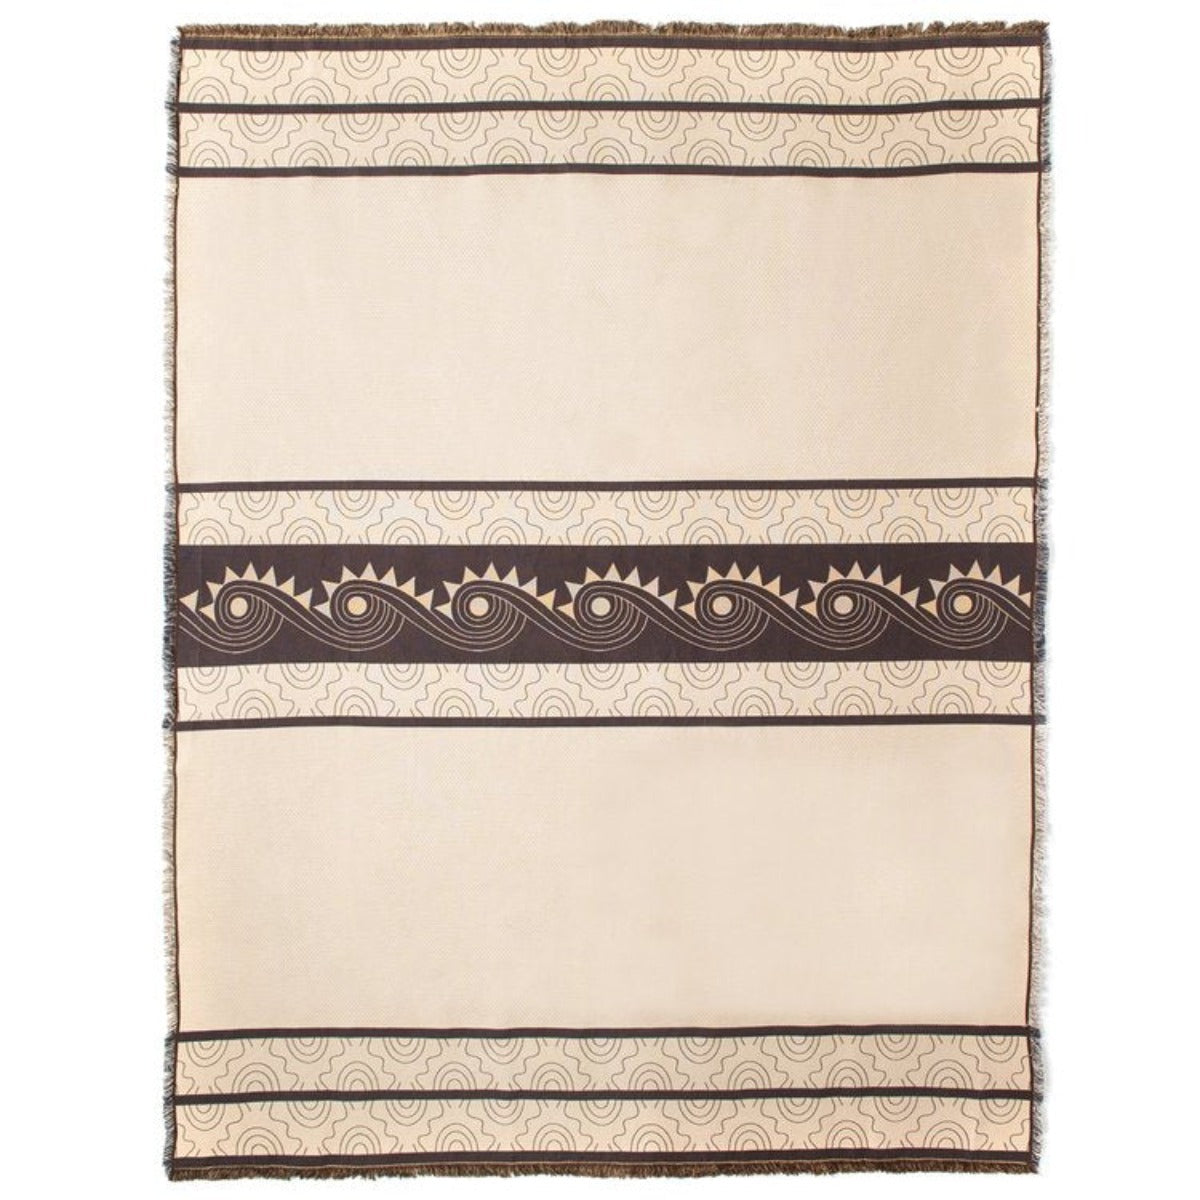 Mahli (Wind) Blanket